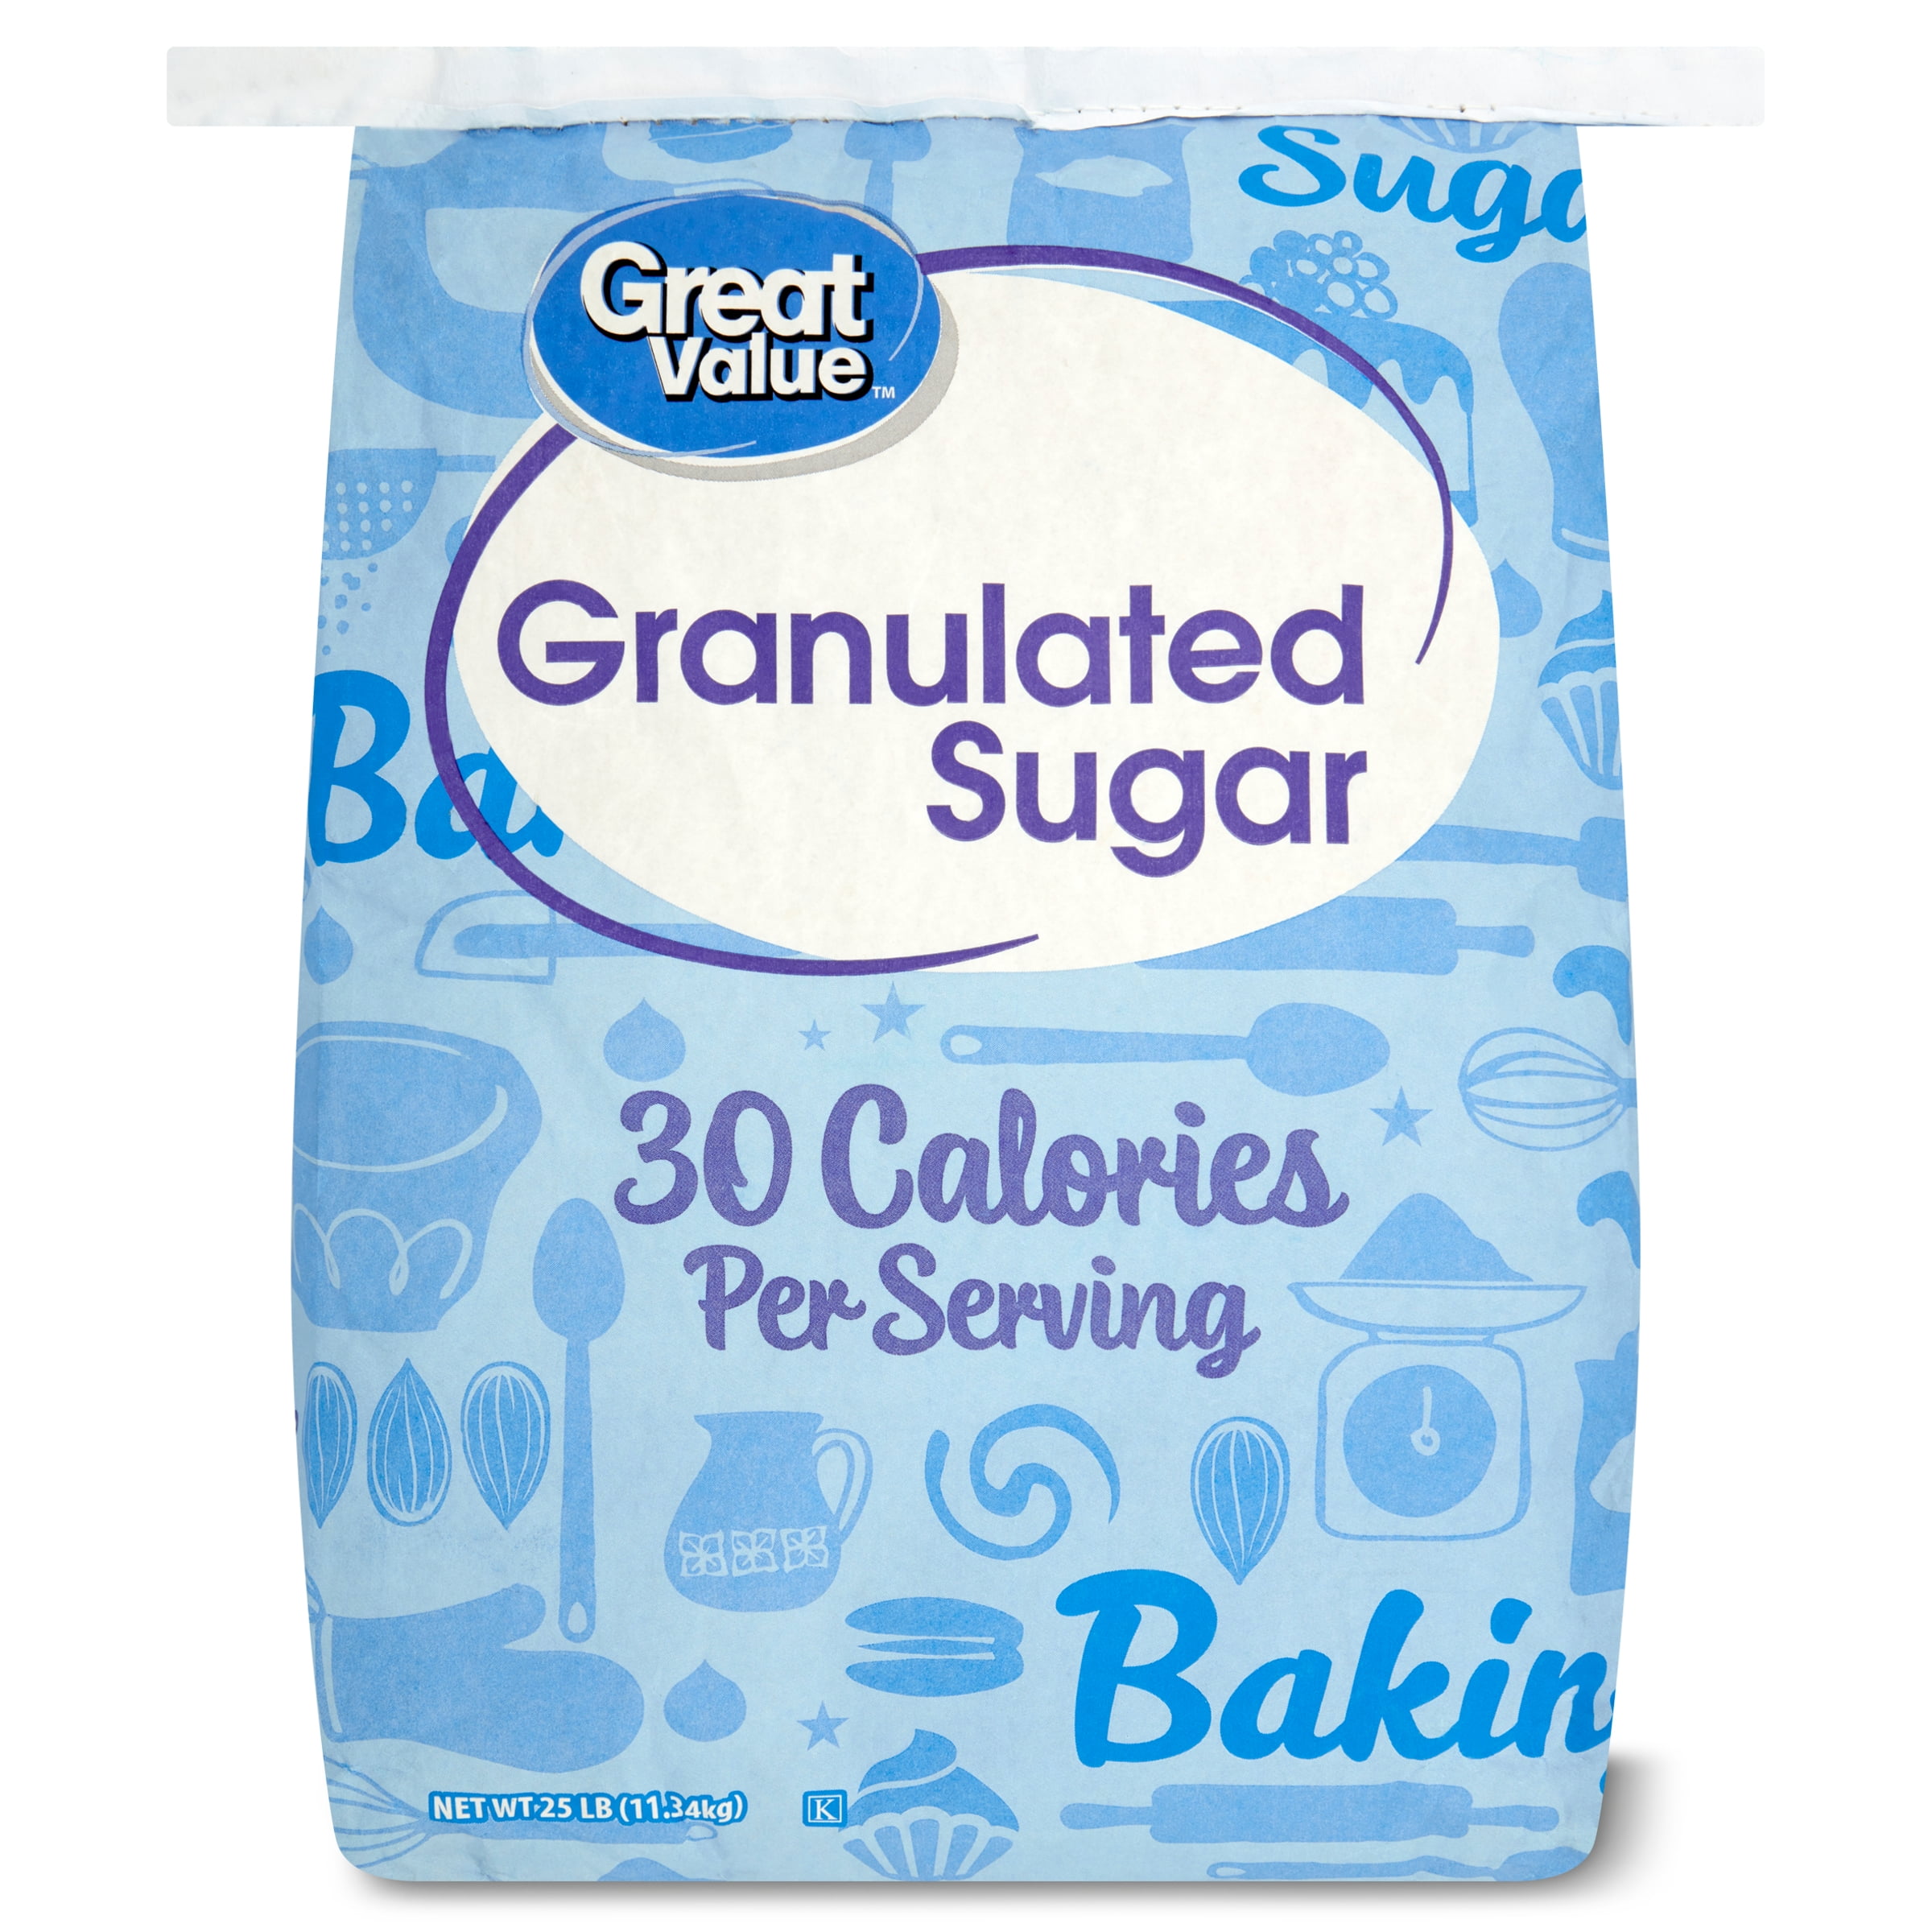 25 lb sugar